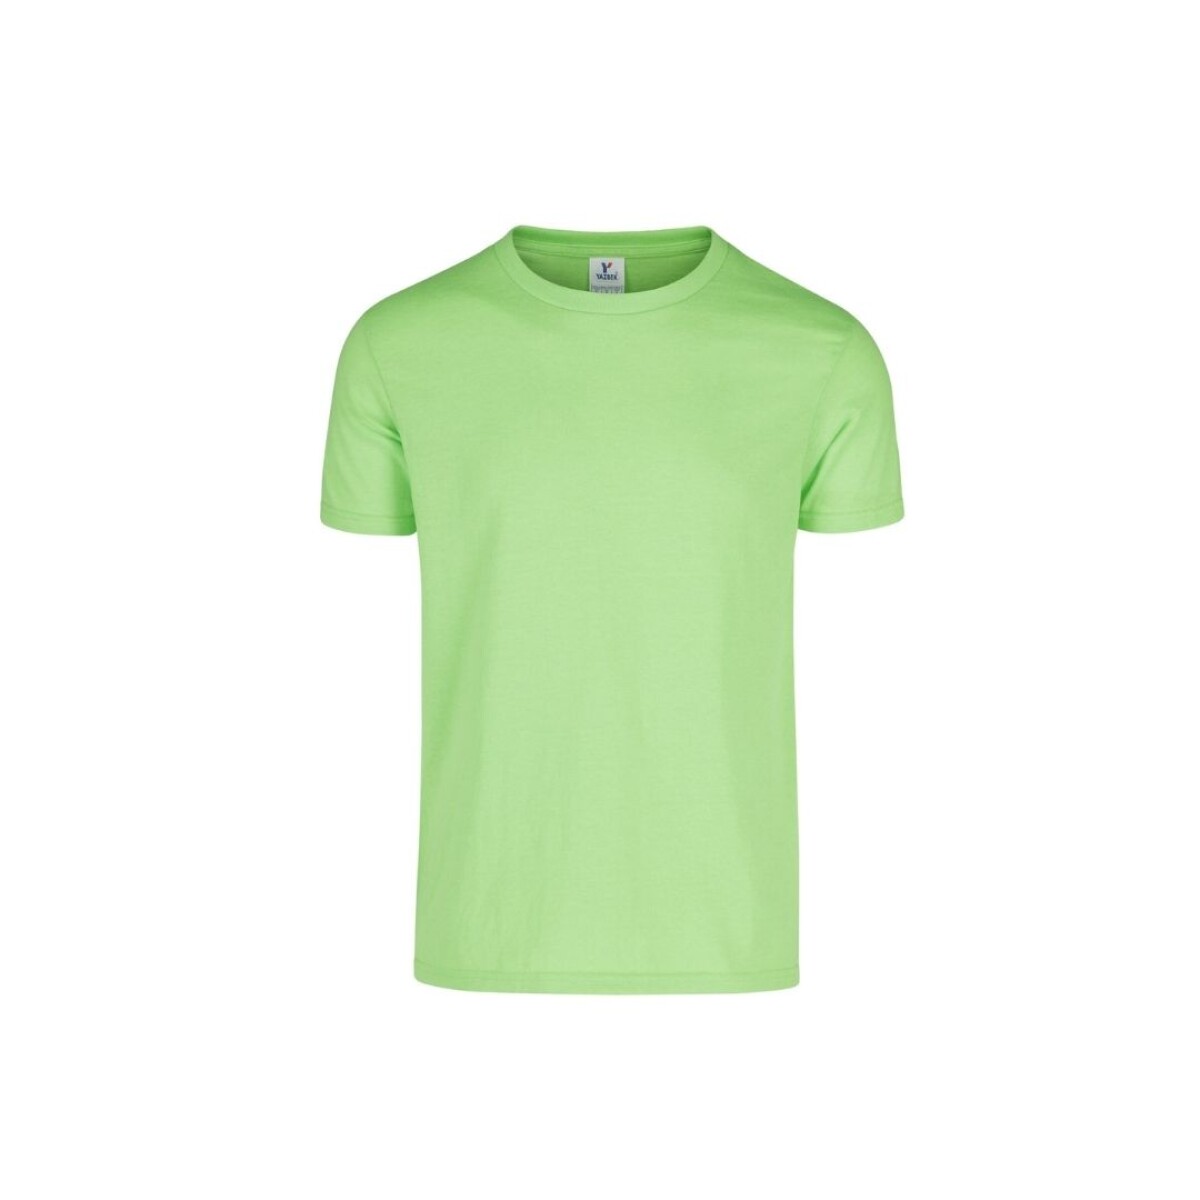 Camiseta a la base jaspe - Verde neón 